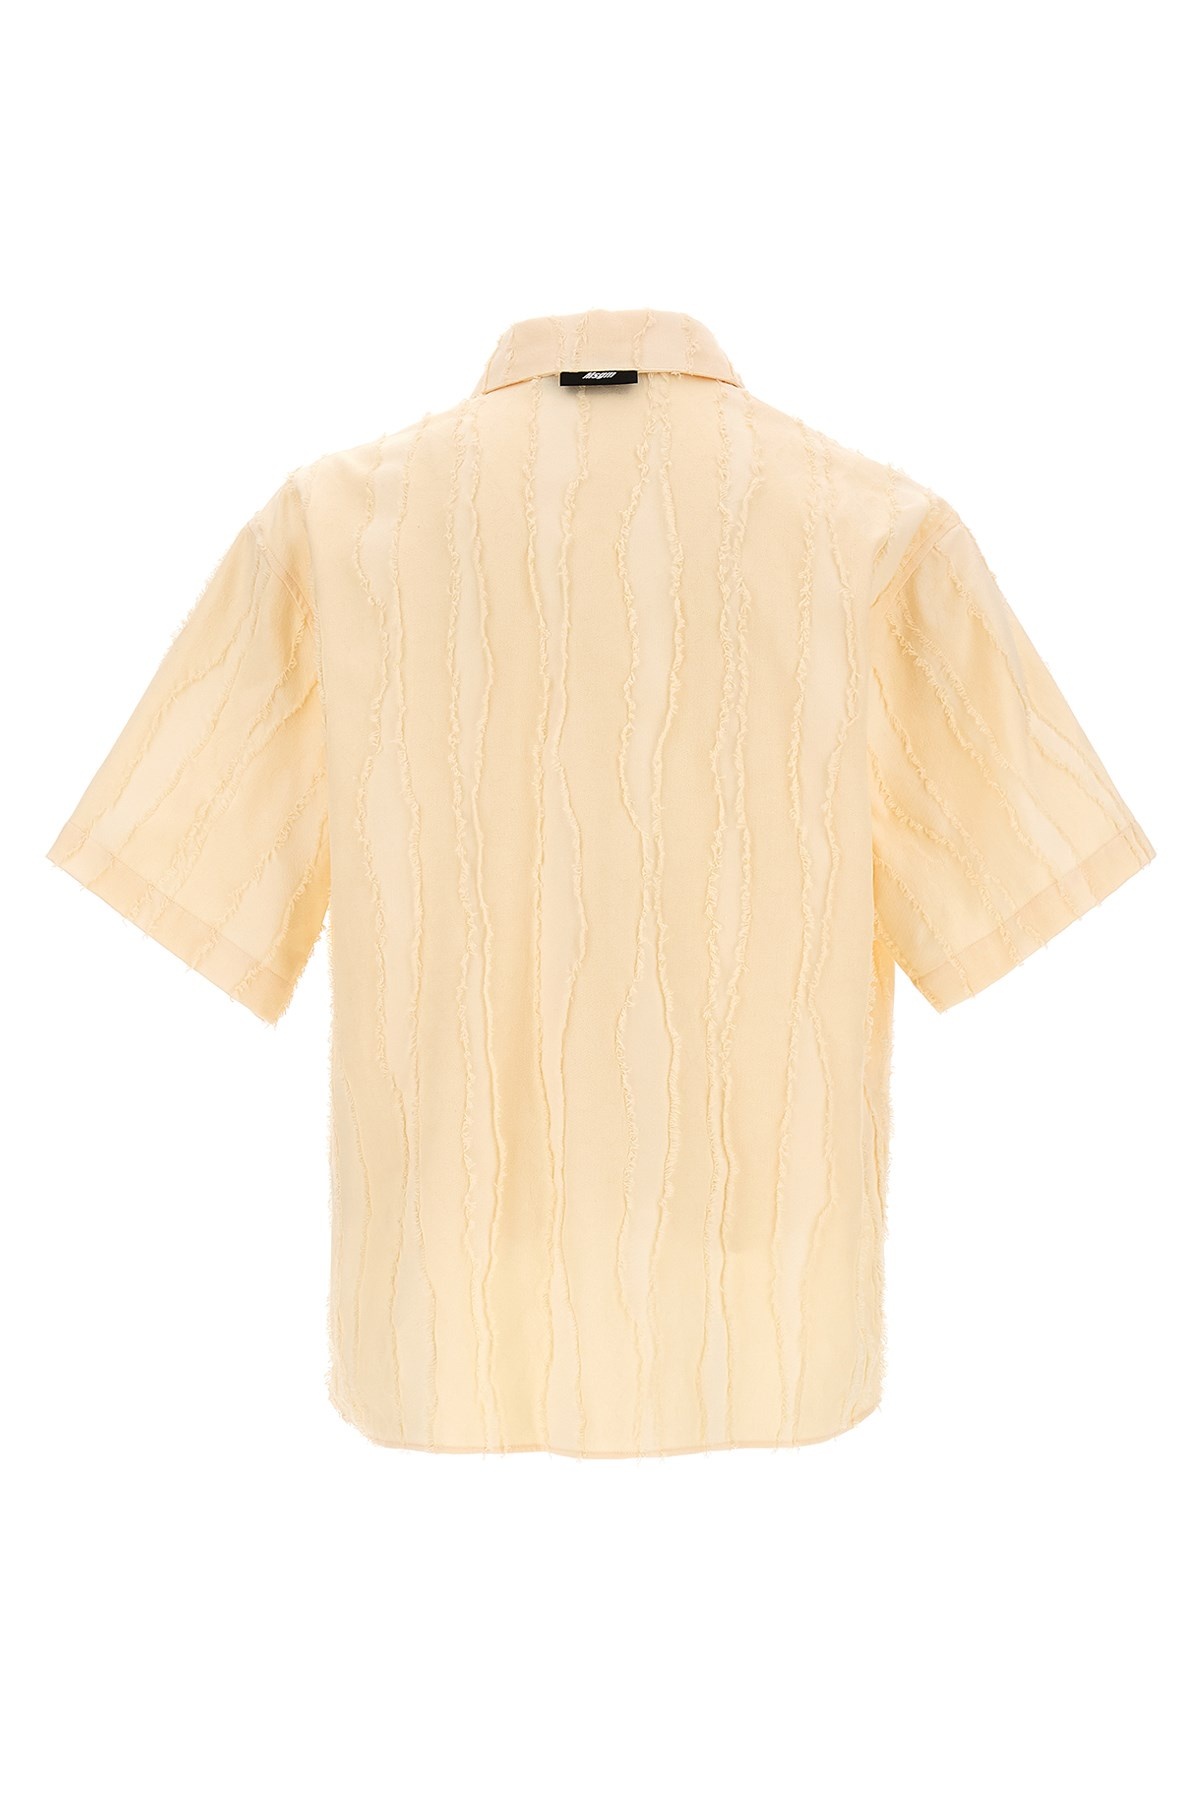 Fil coupe cotton shirt - 2